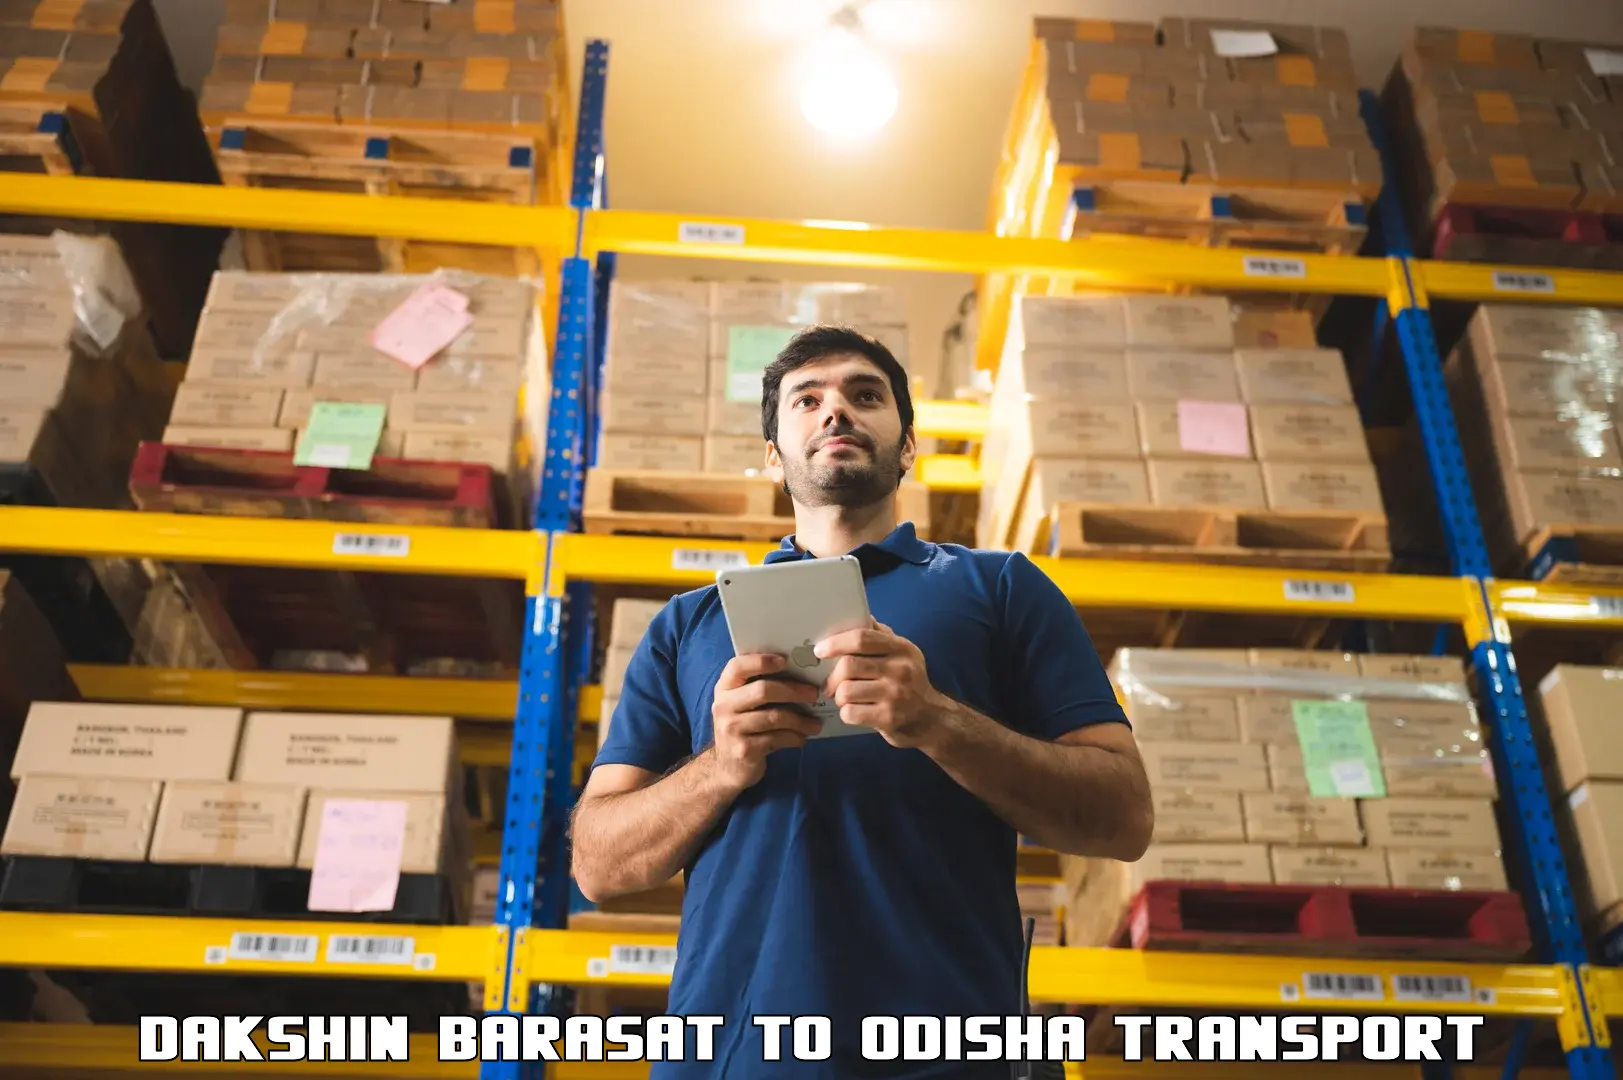 Online transport service Dakshin Barasat to Polasara